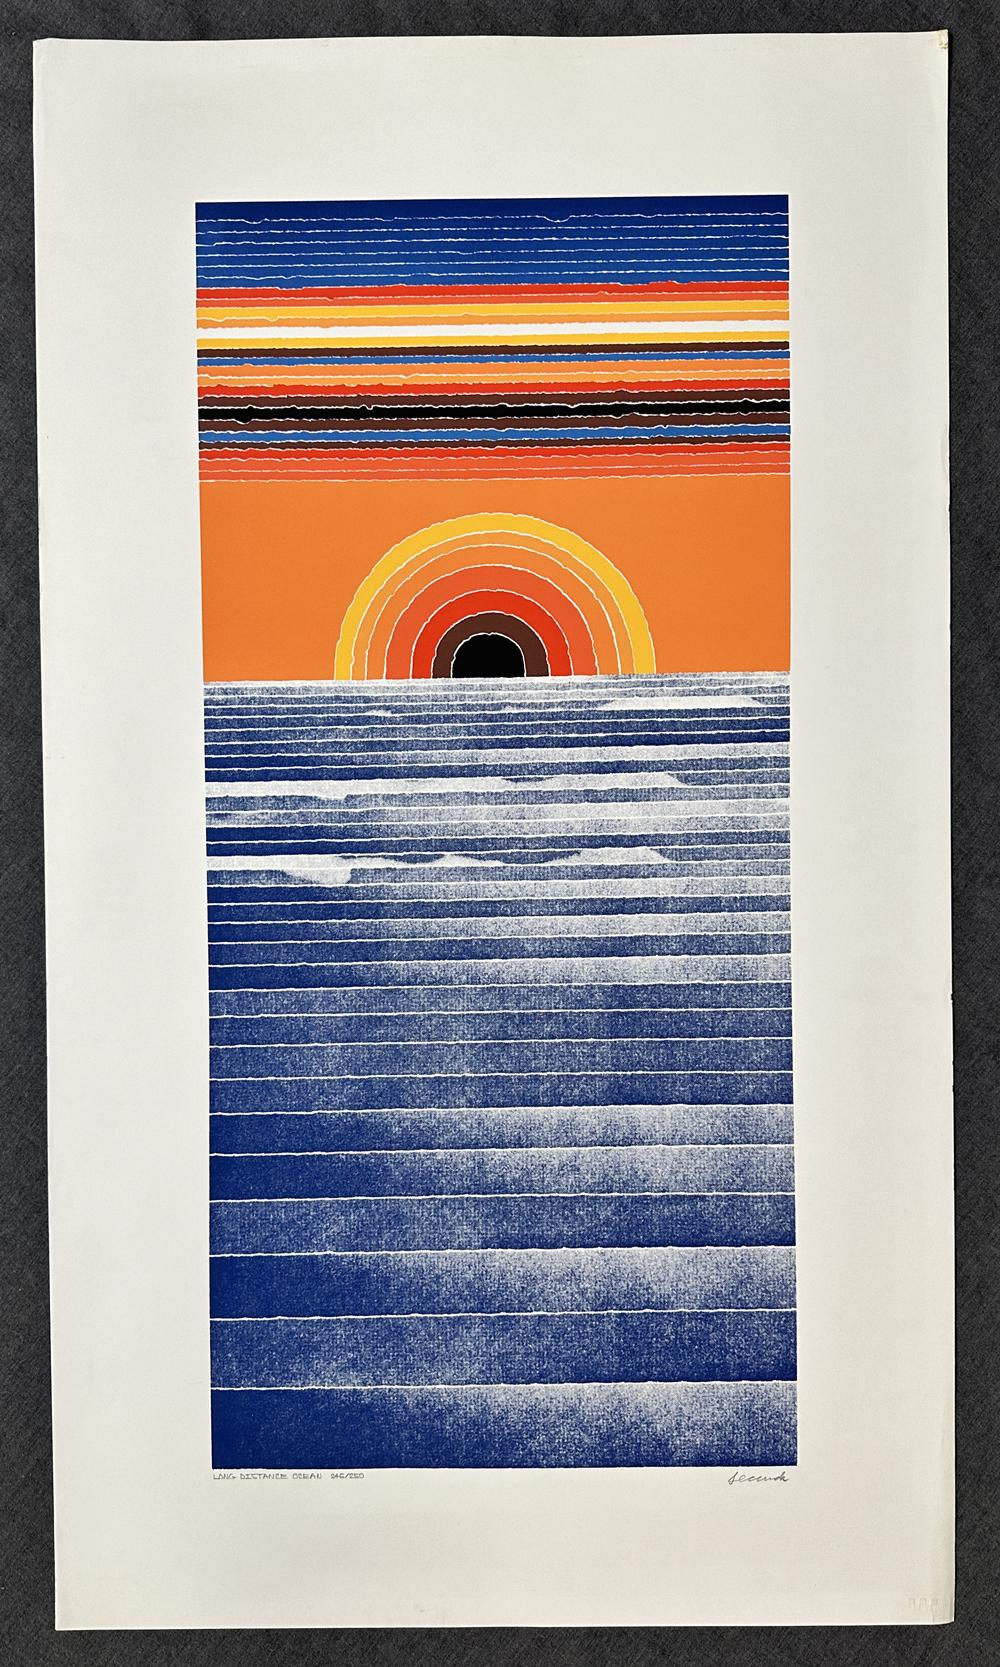 Long Distance Ocean 1980 - Print by Arthur Secunda